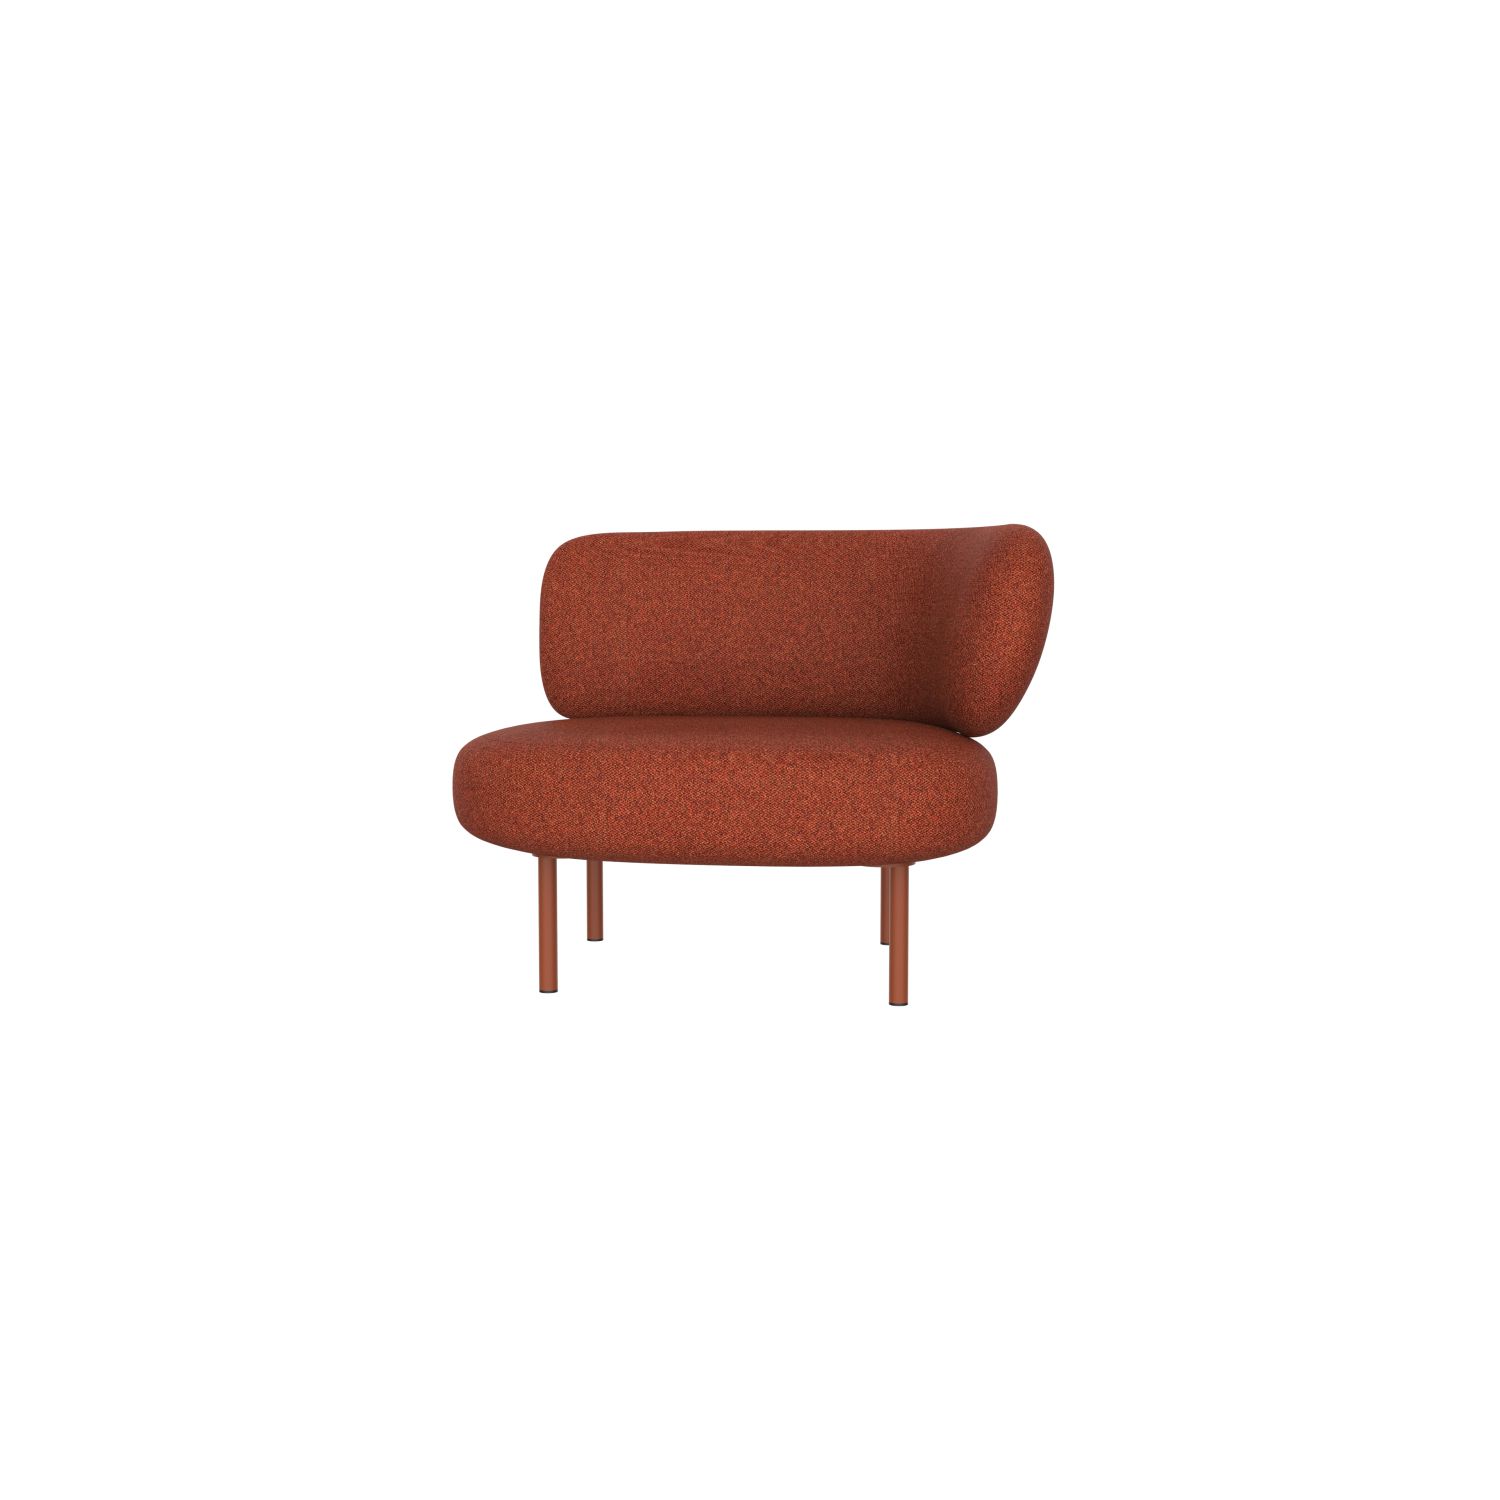 lensvelt studio stefan scholten sofa 1seater 100x77cm lounge part left moss clay brown 65 frame copper brown ral8004